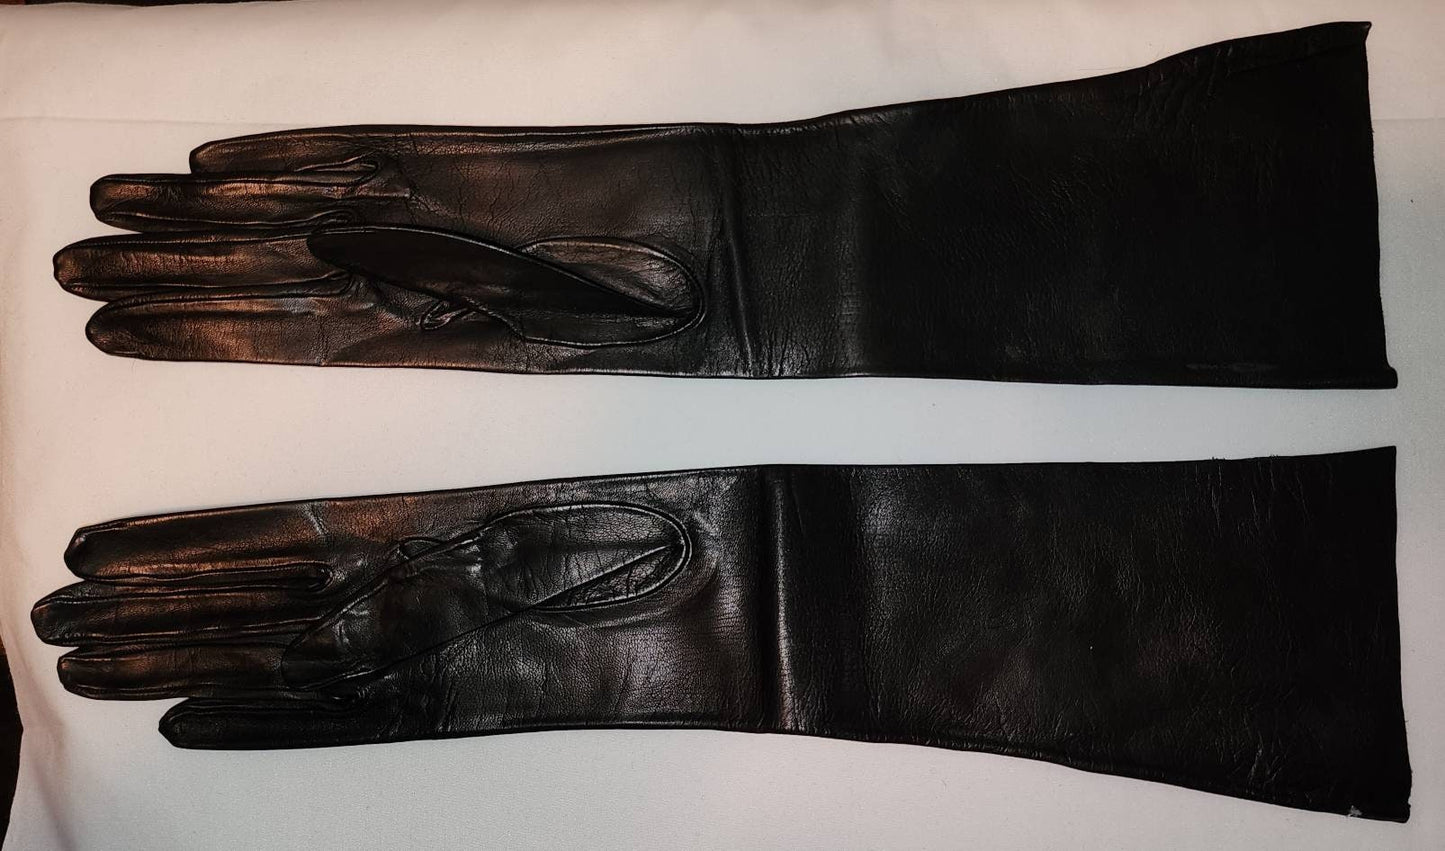 Unworn Vintage Leather Gloves 1950s 60s Long Thin Black Leather Gloves Mid Century Fetish Boho 6 3/4